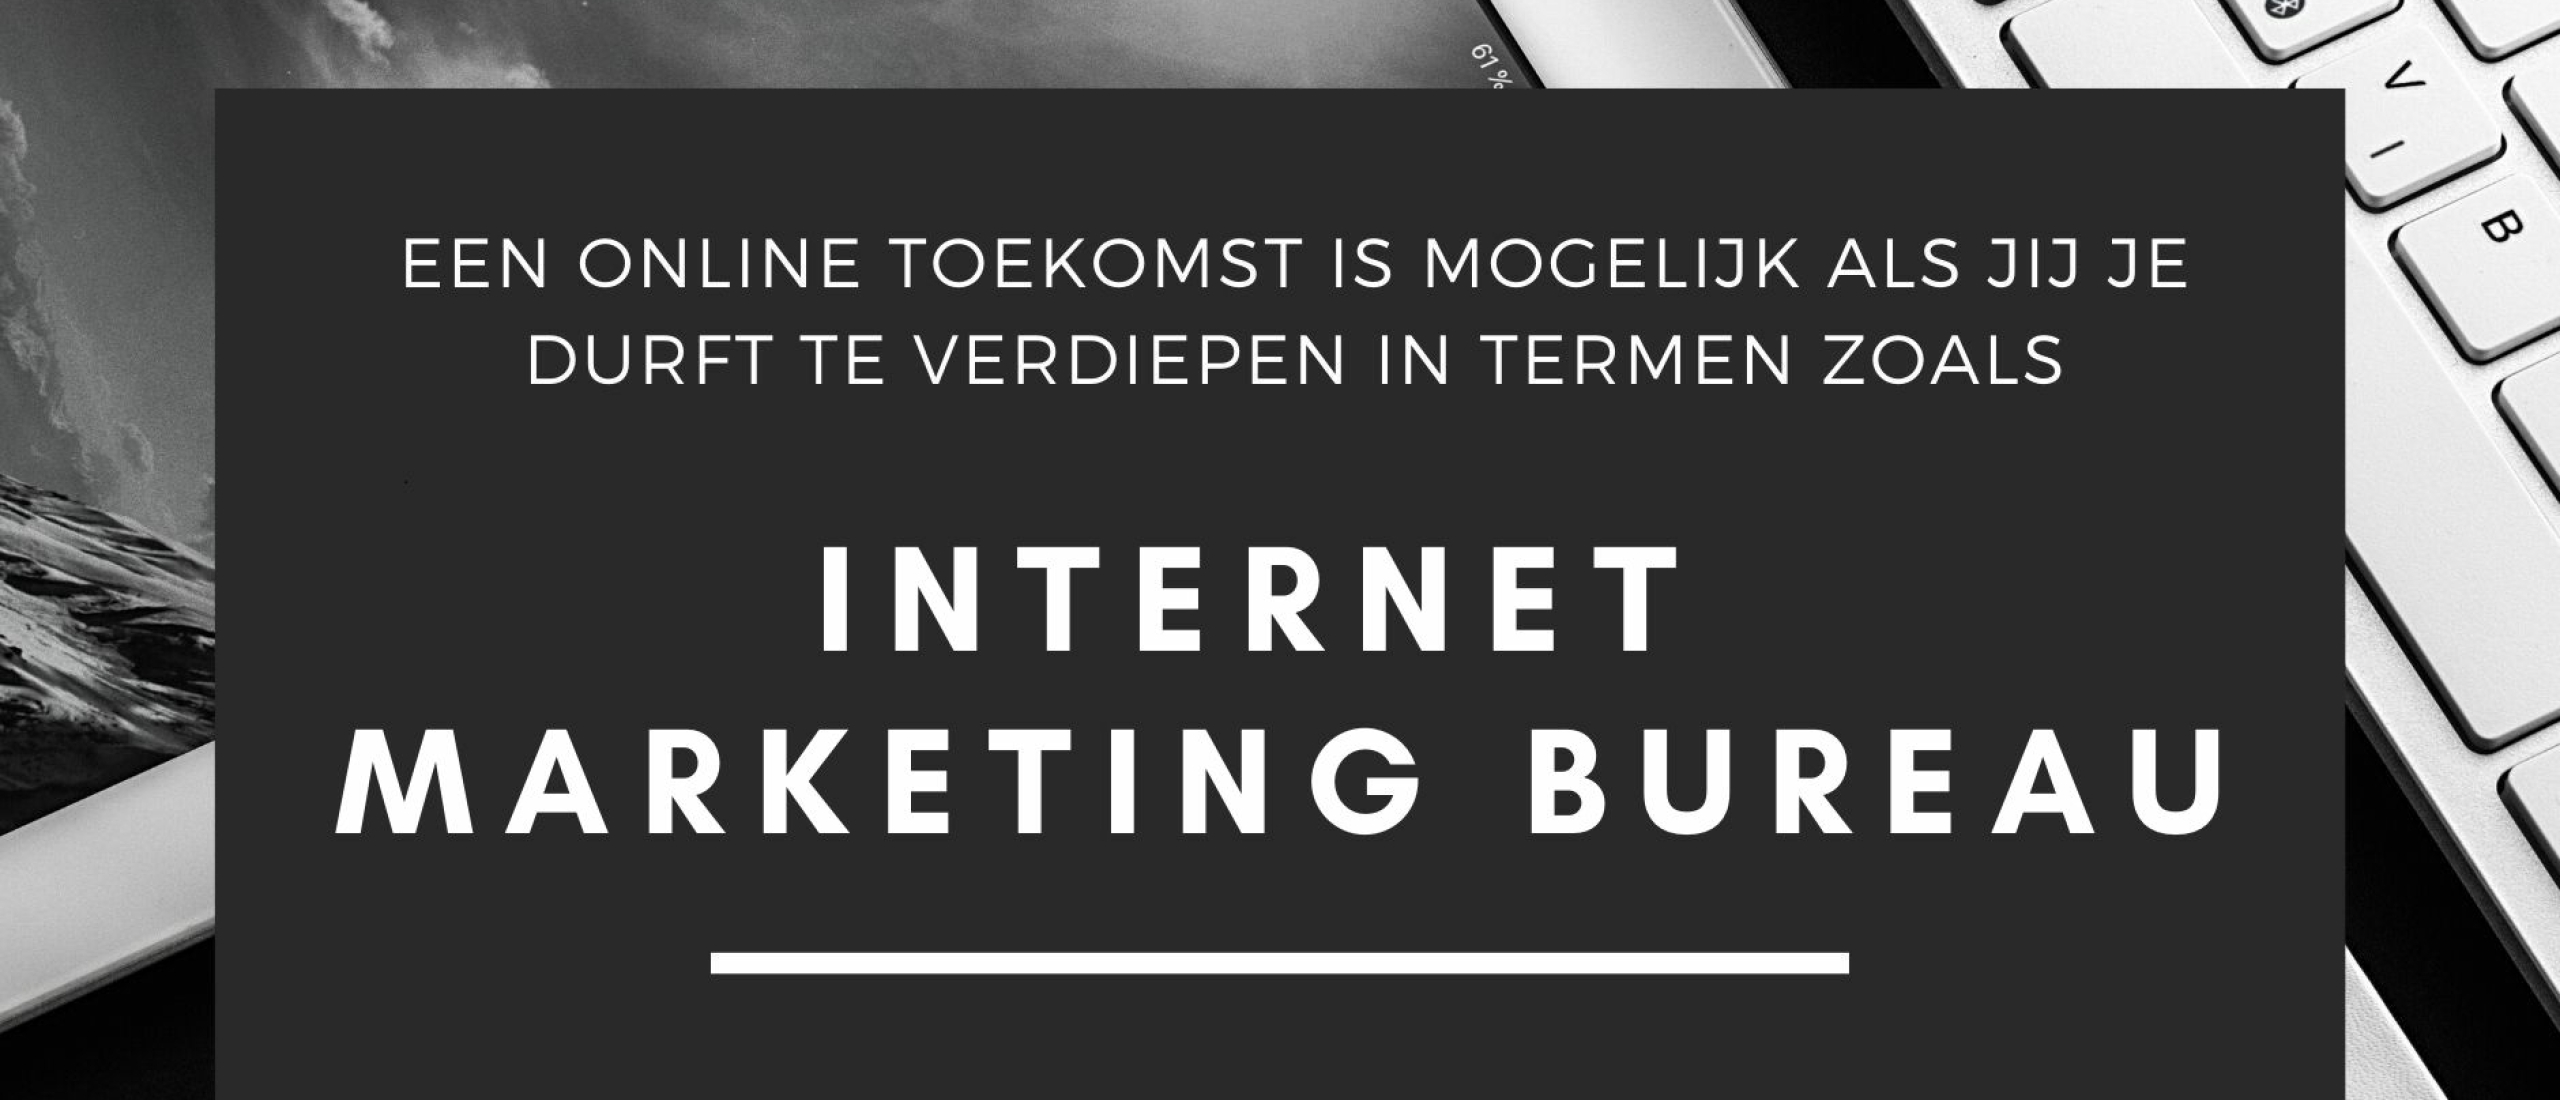 Internet Marketing Bureau